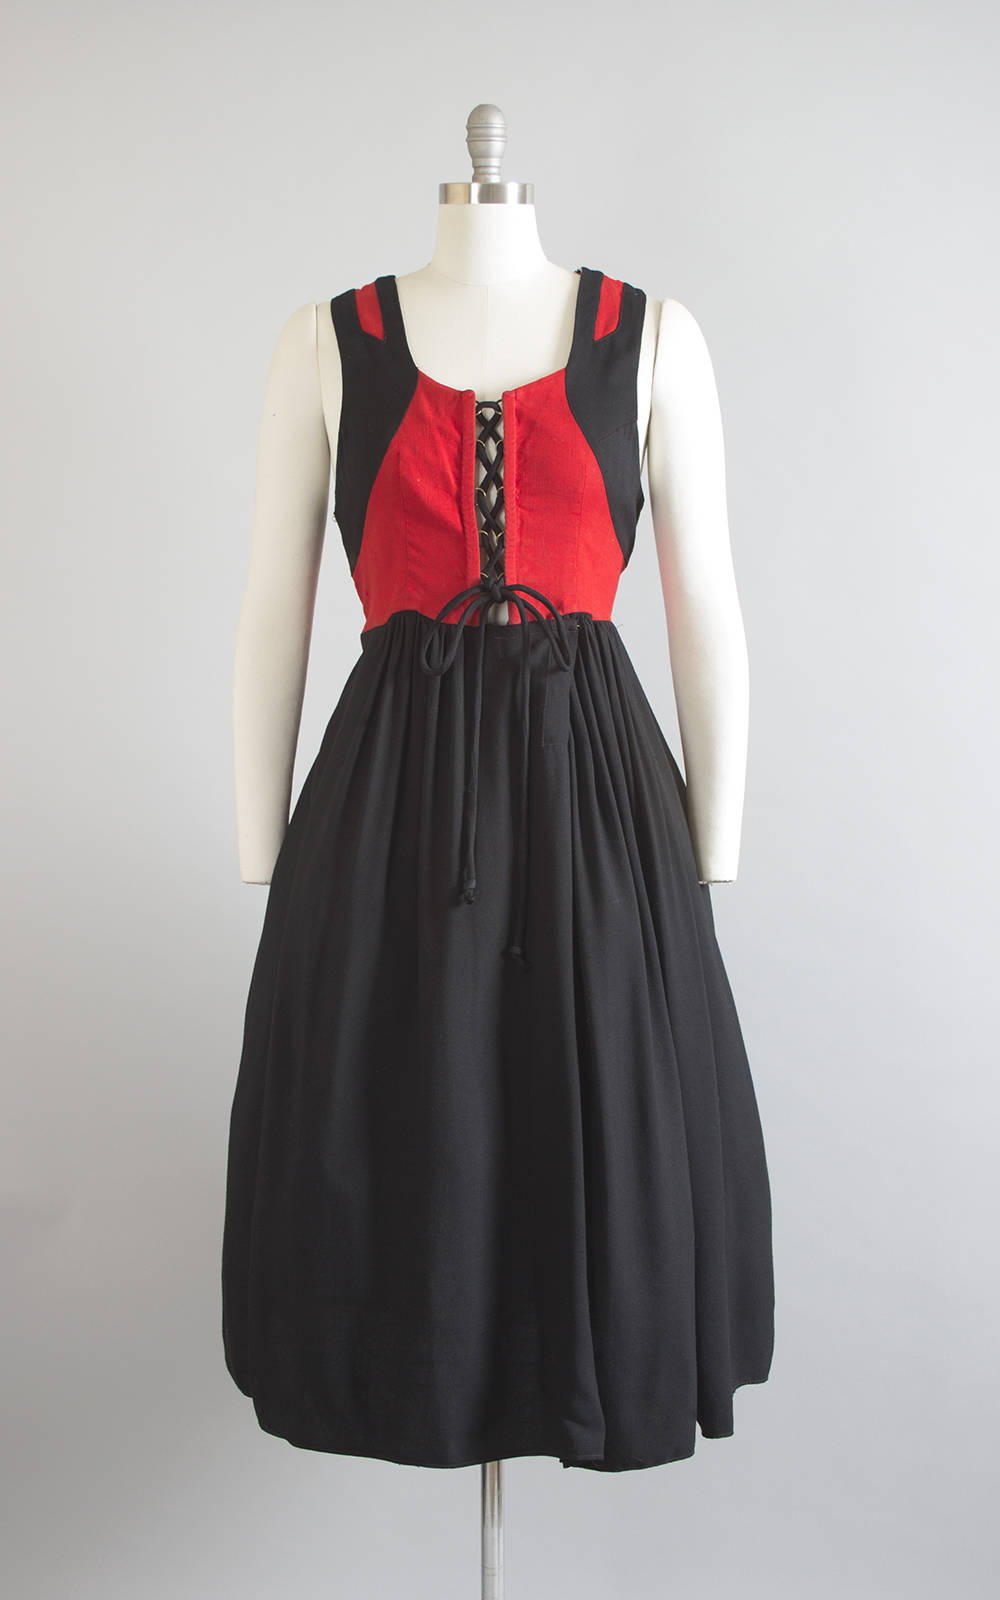 Vintage 1950s 1960s Dress | 50s 60s Traditional German Dirndl Cotton Lace Up Oktoberfest Red Black Full Skirt Folk Sundress (large/xl)